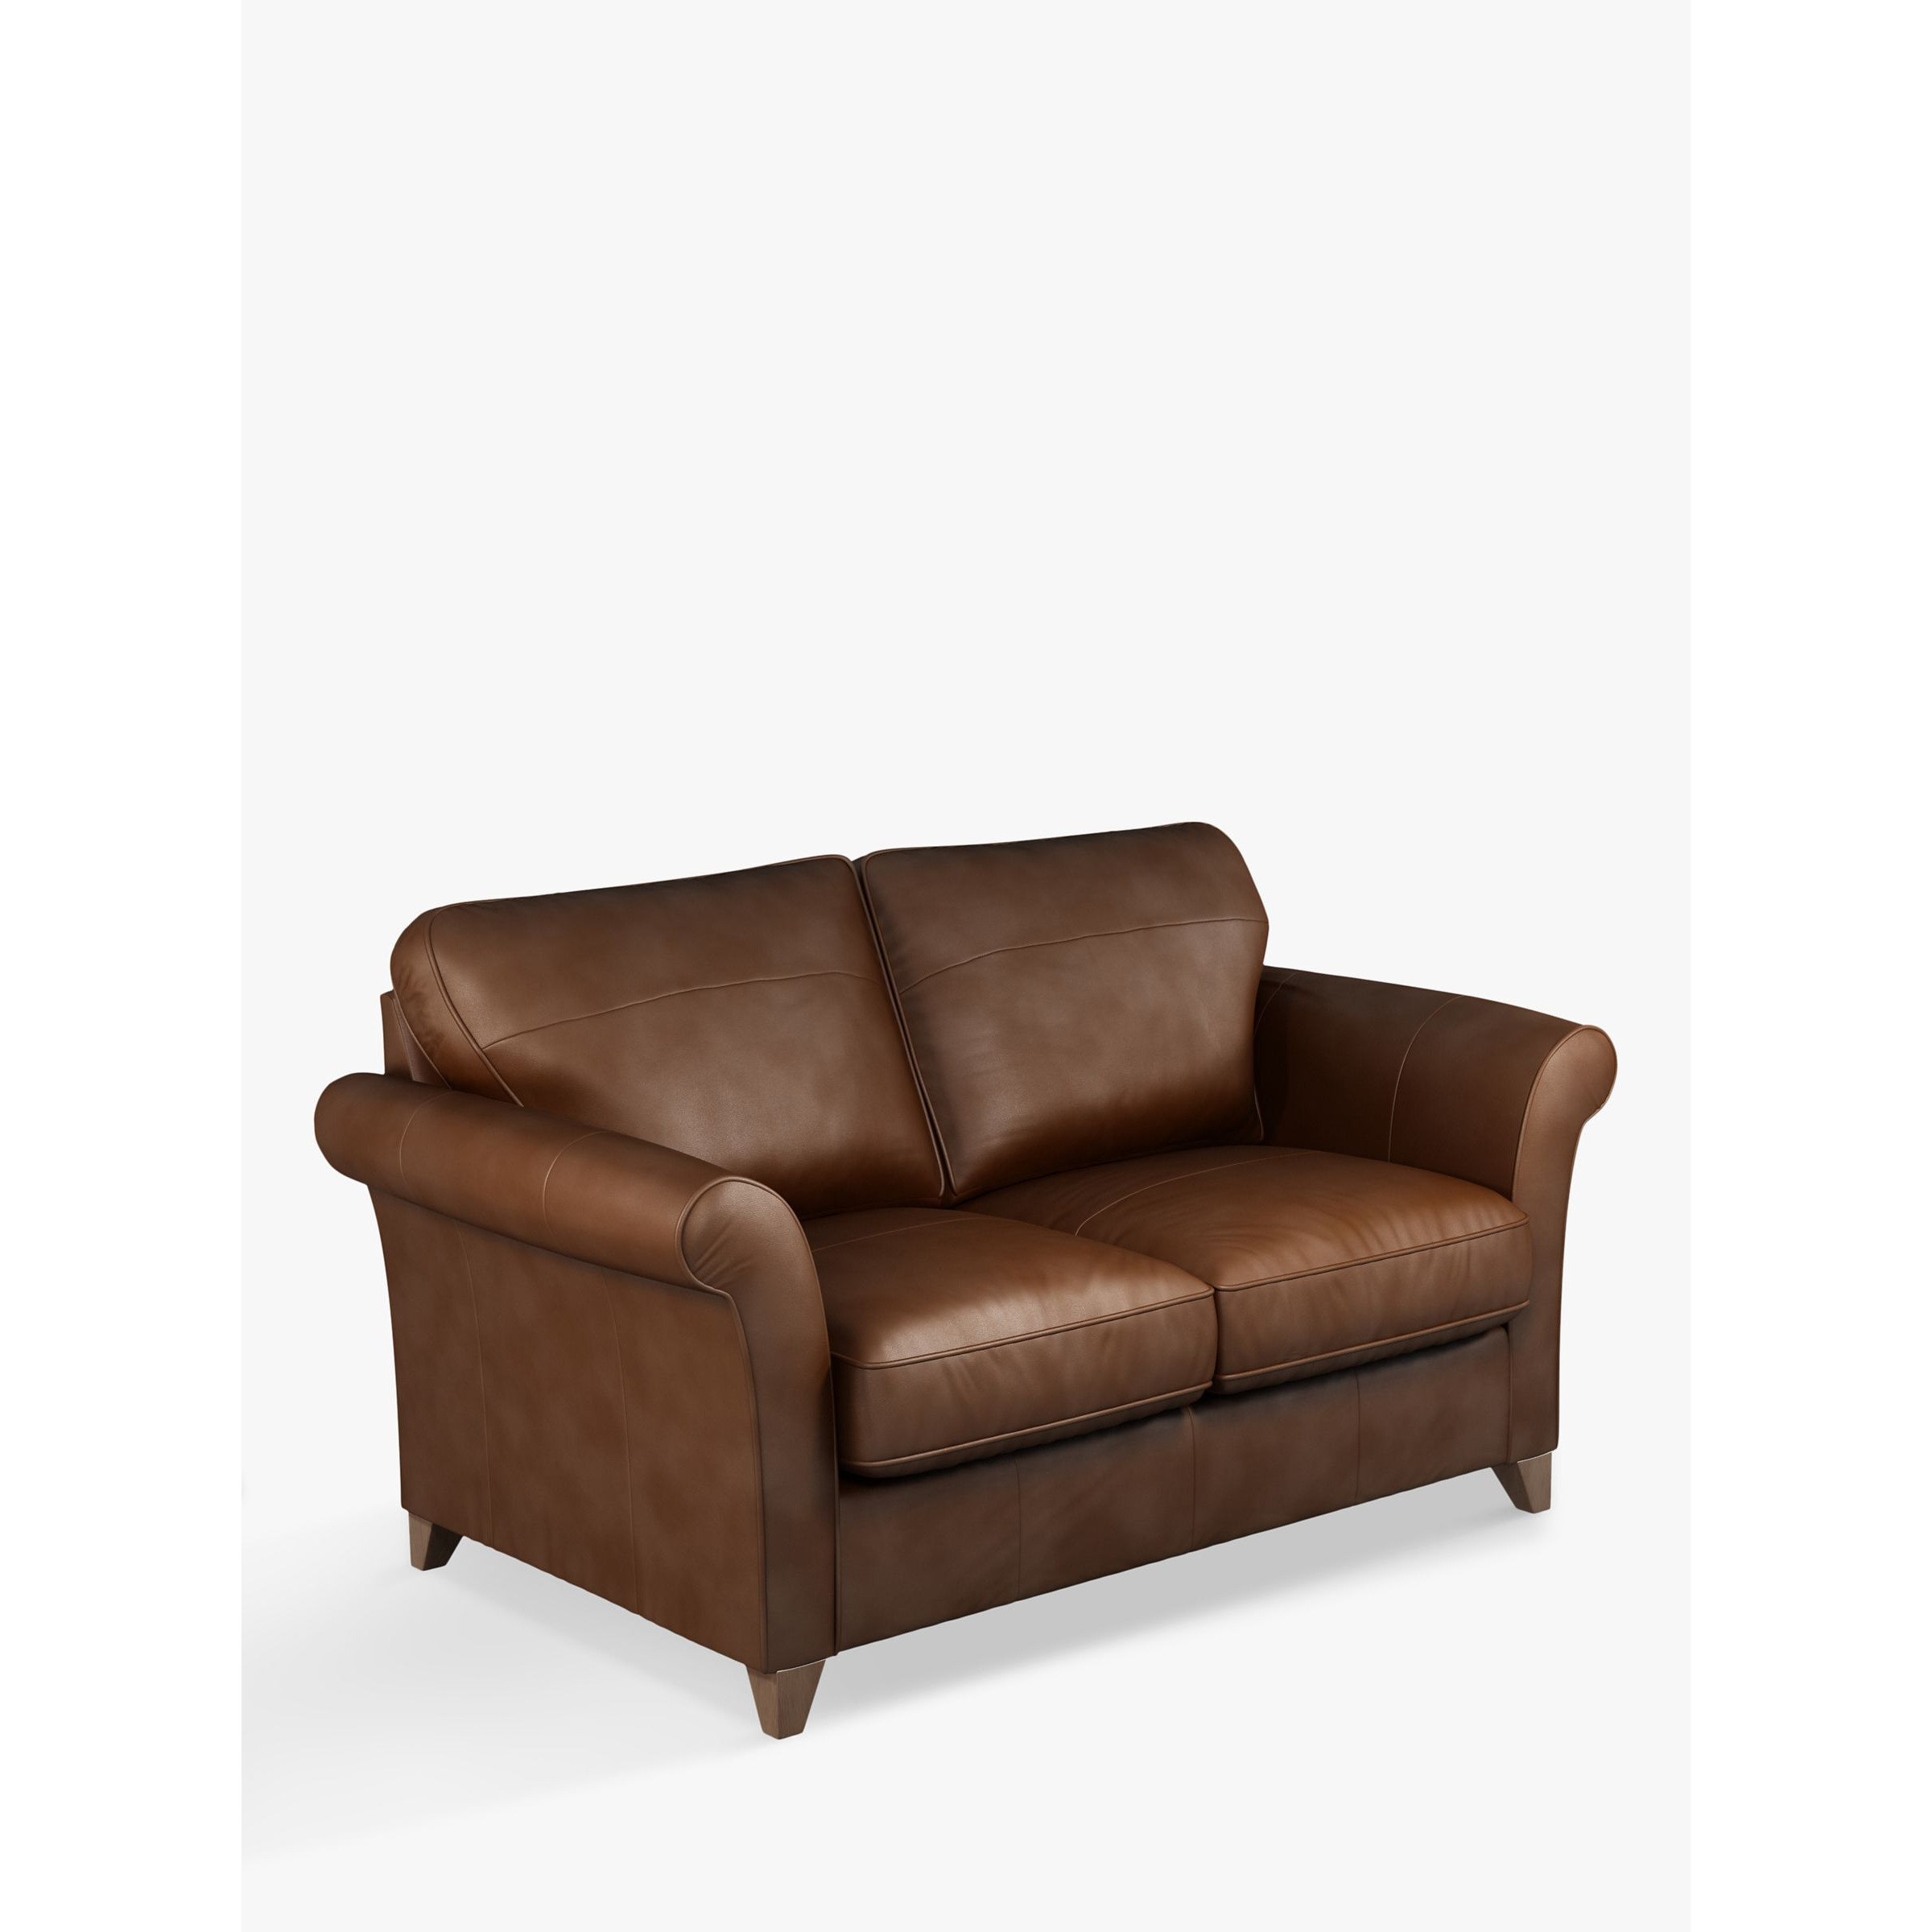 John Lewis Charlotte Medium 2 Seater Leather Sofa, Dark Leg - image 1